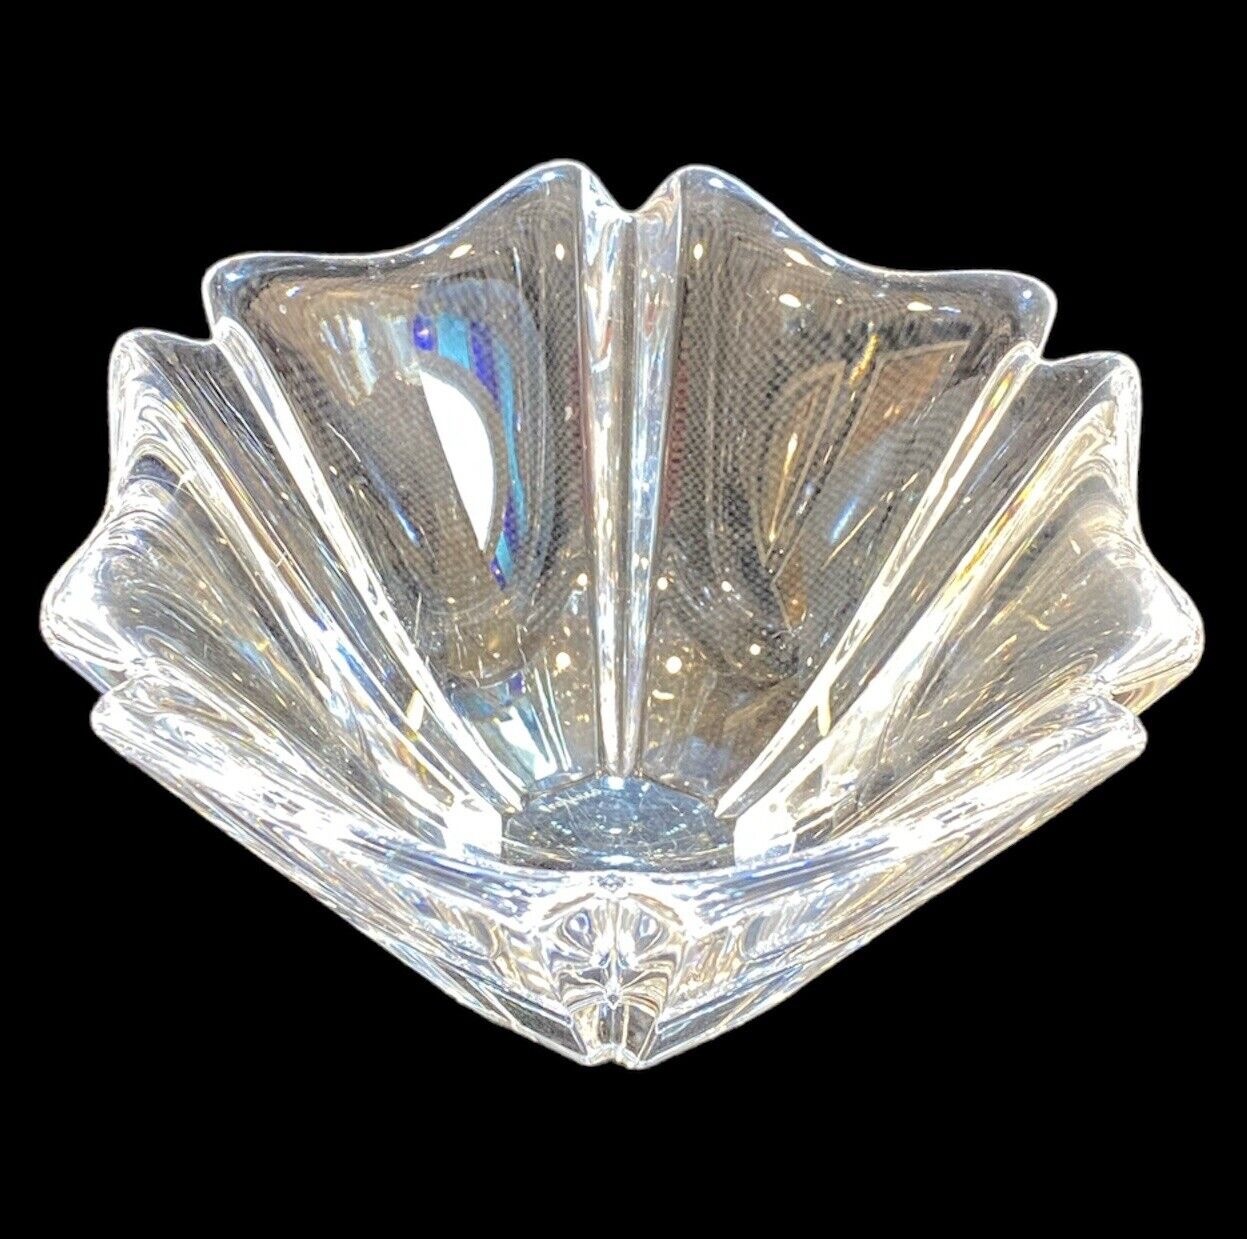 ORREFORS Swedish Crystal Fliral “ORION” Candy Bowl Designed By Lars Hellsten